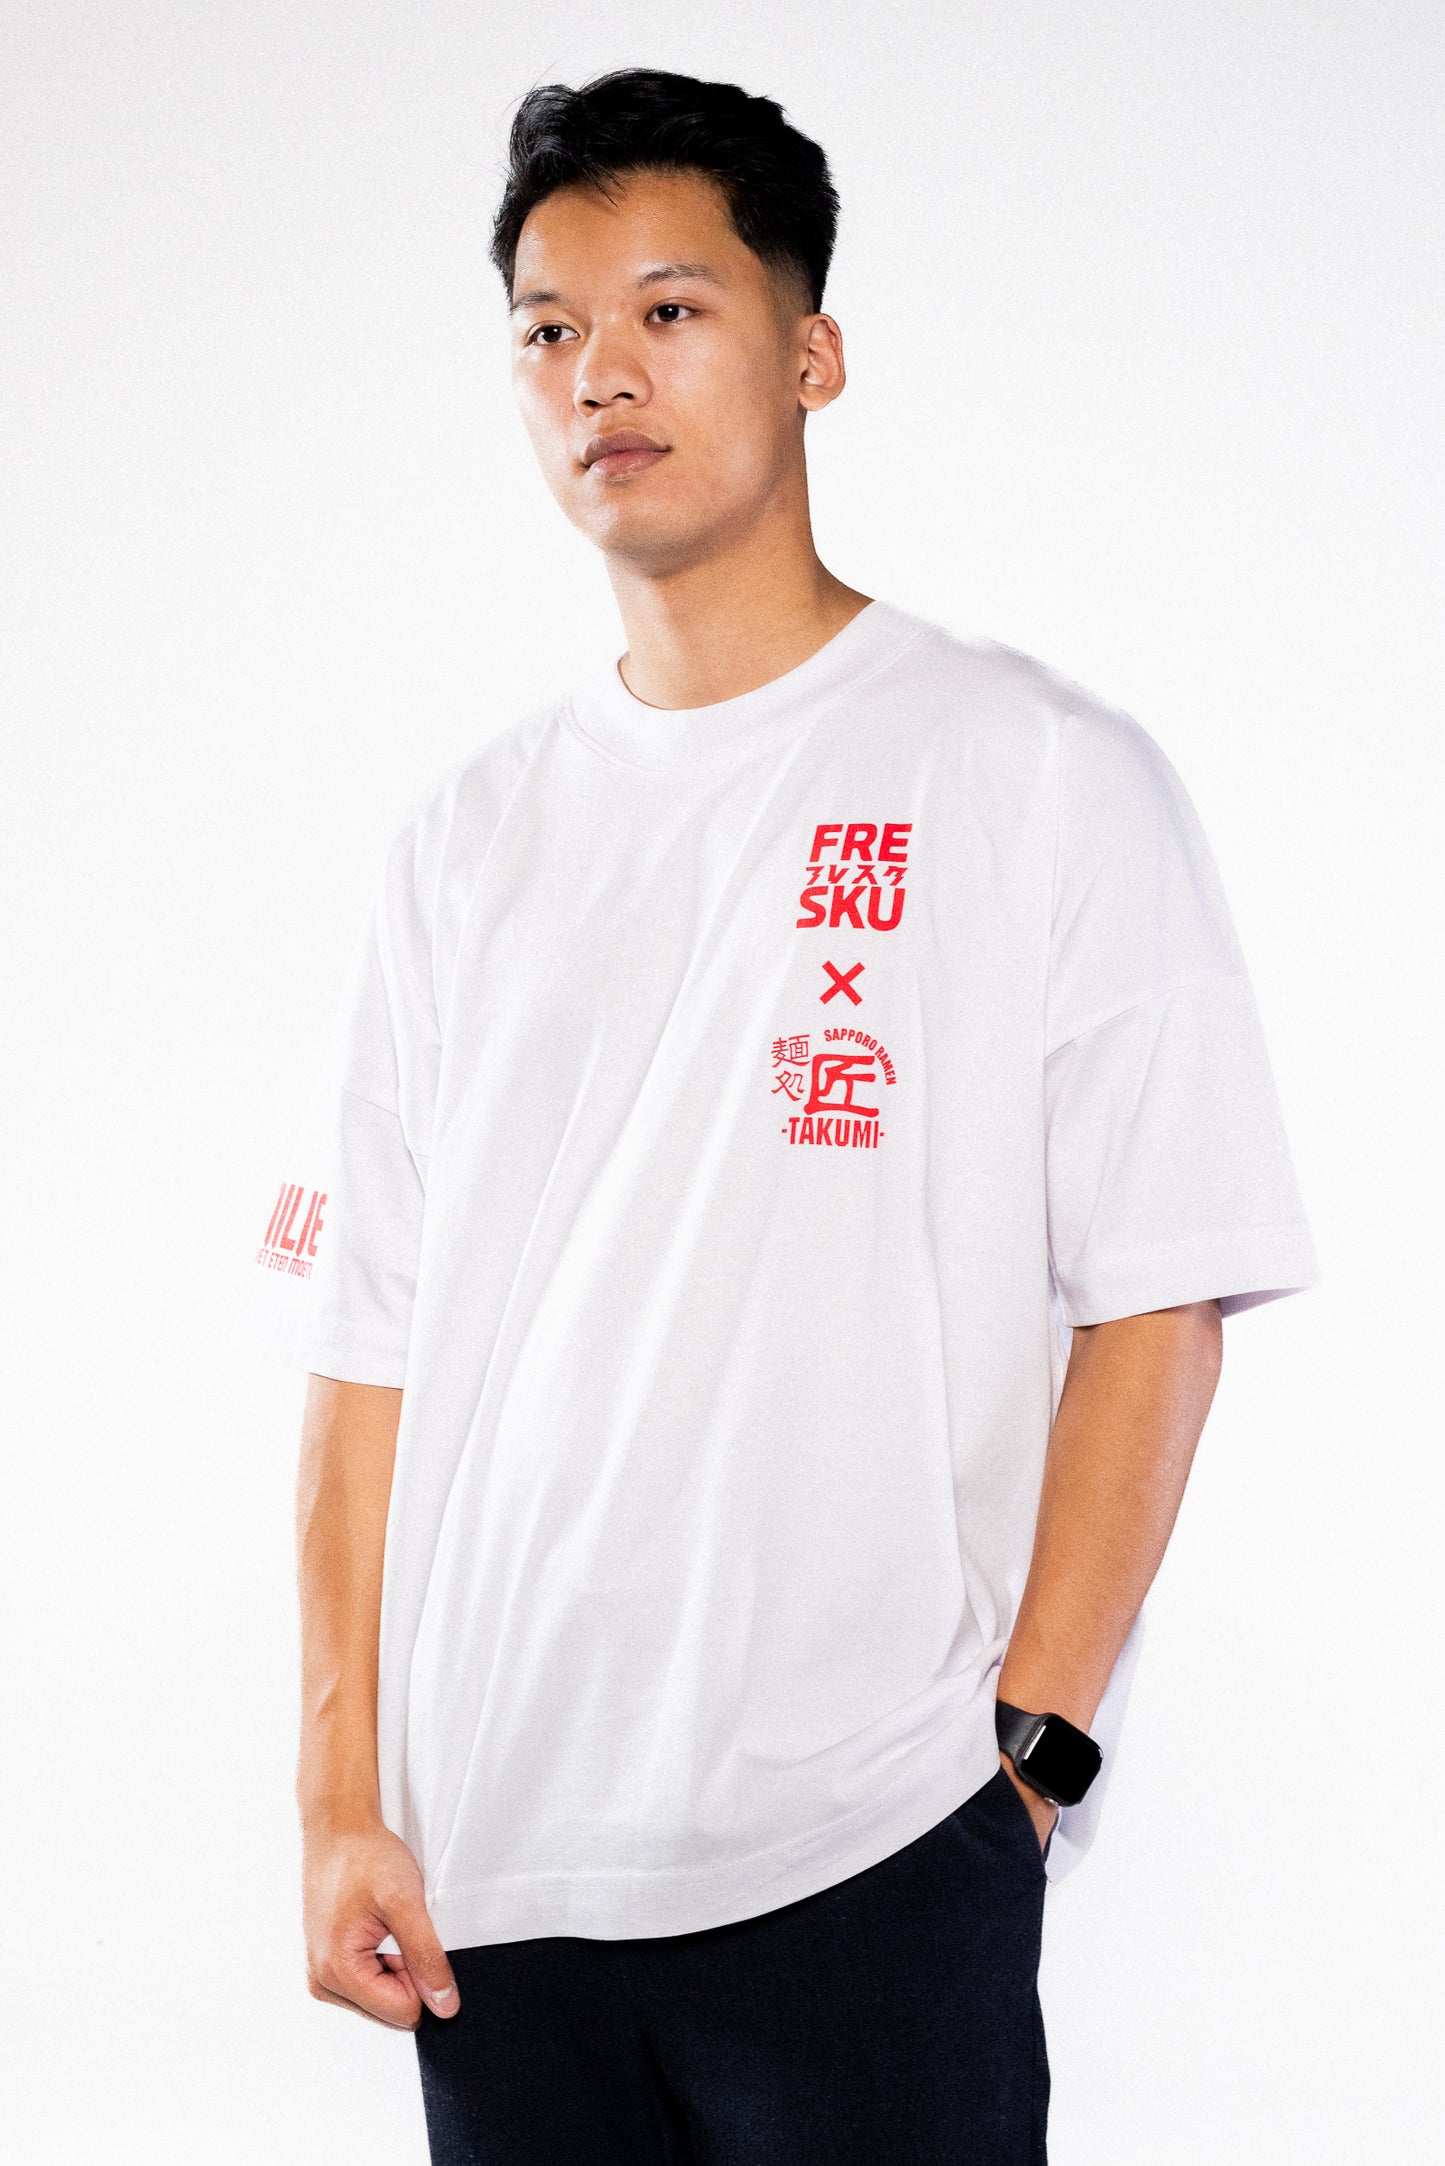 Fresku x Takumi Collaboration White T-Shirt